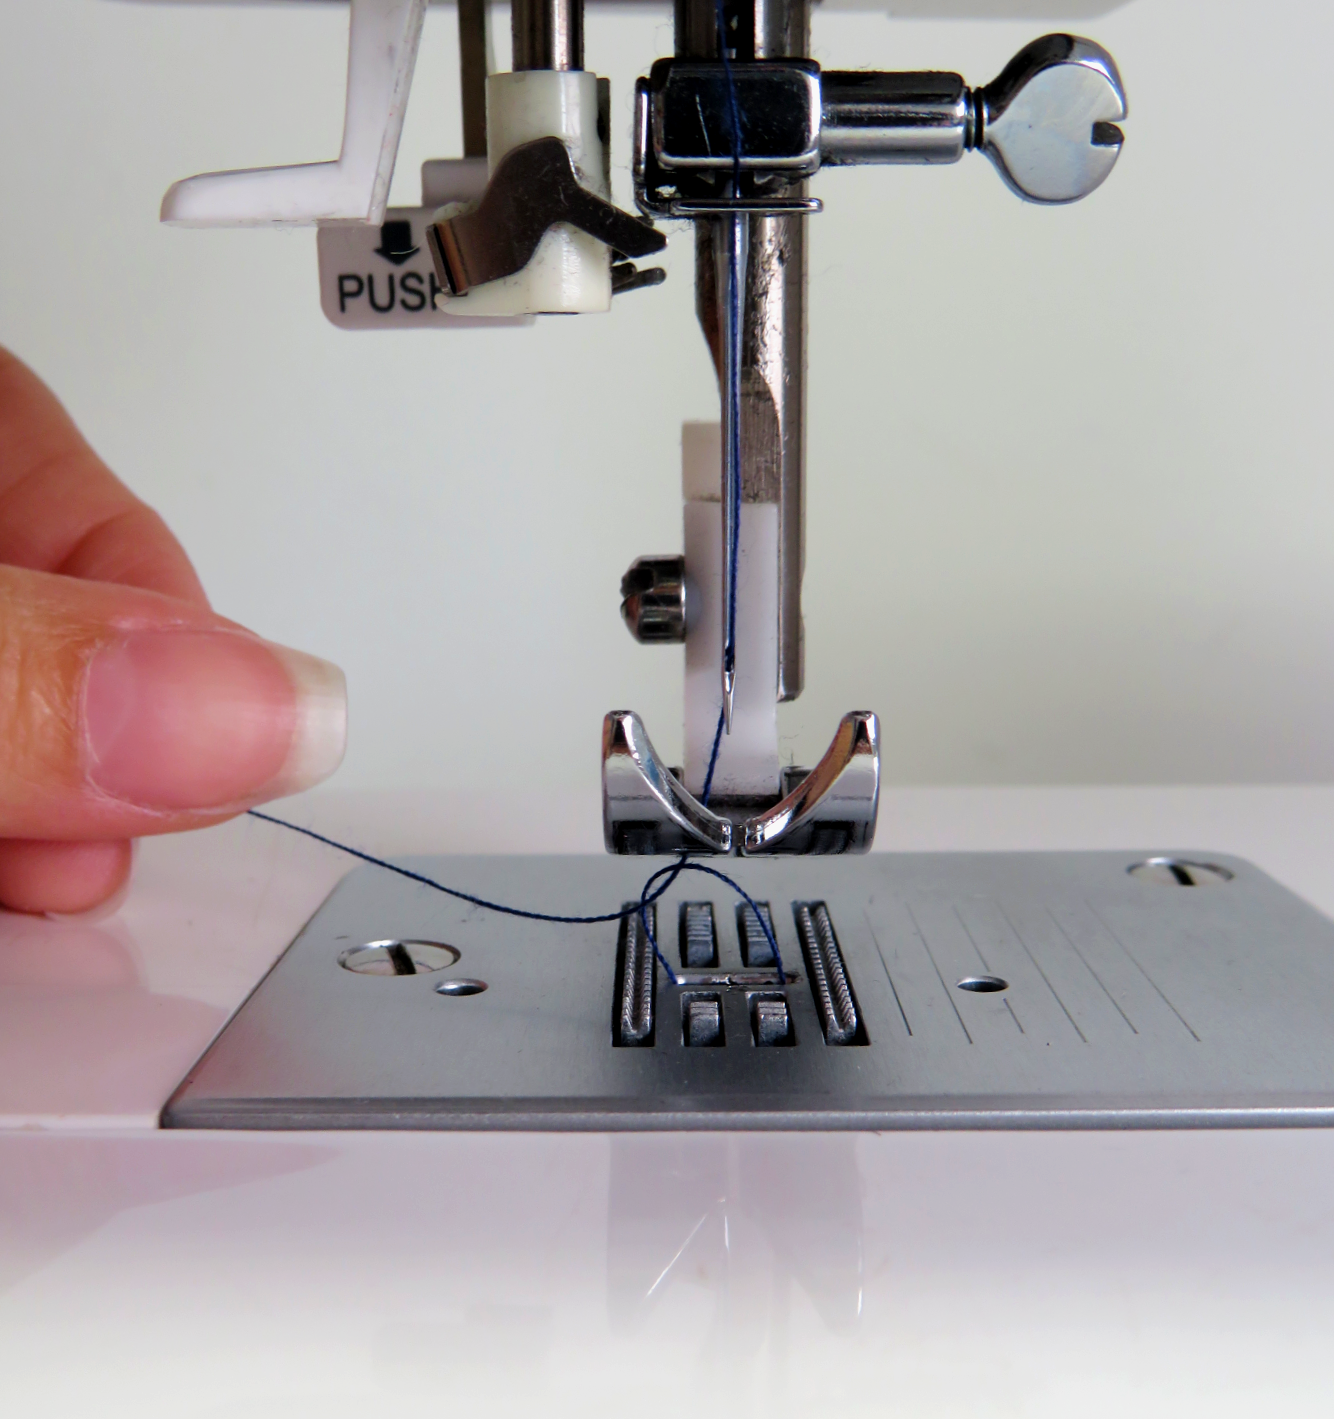 Enhebrar máquina de coser con canilla horizontal - subtítulos en inglés 